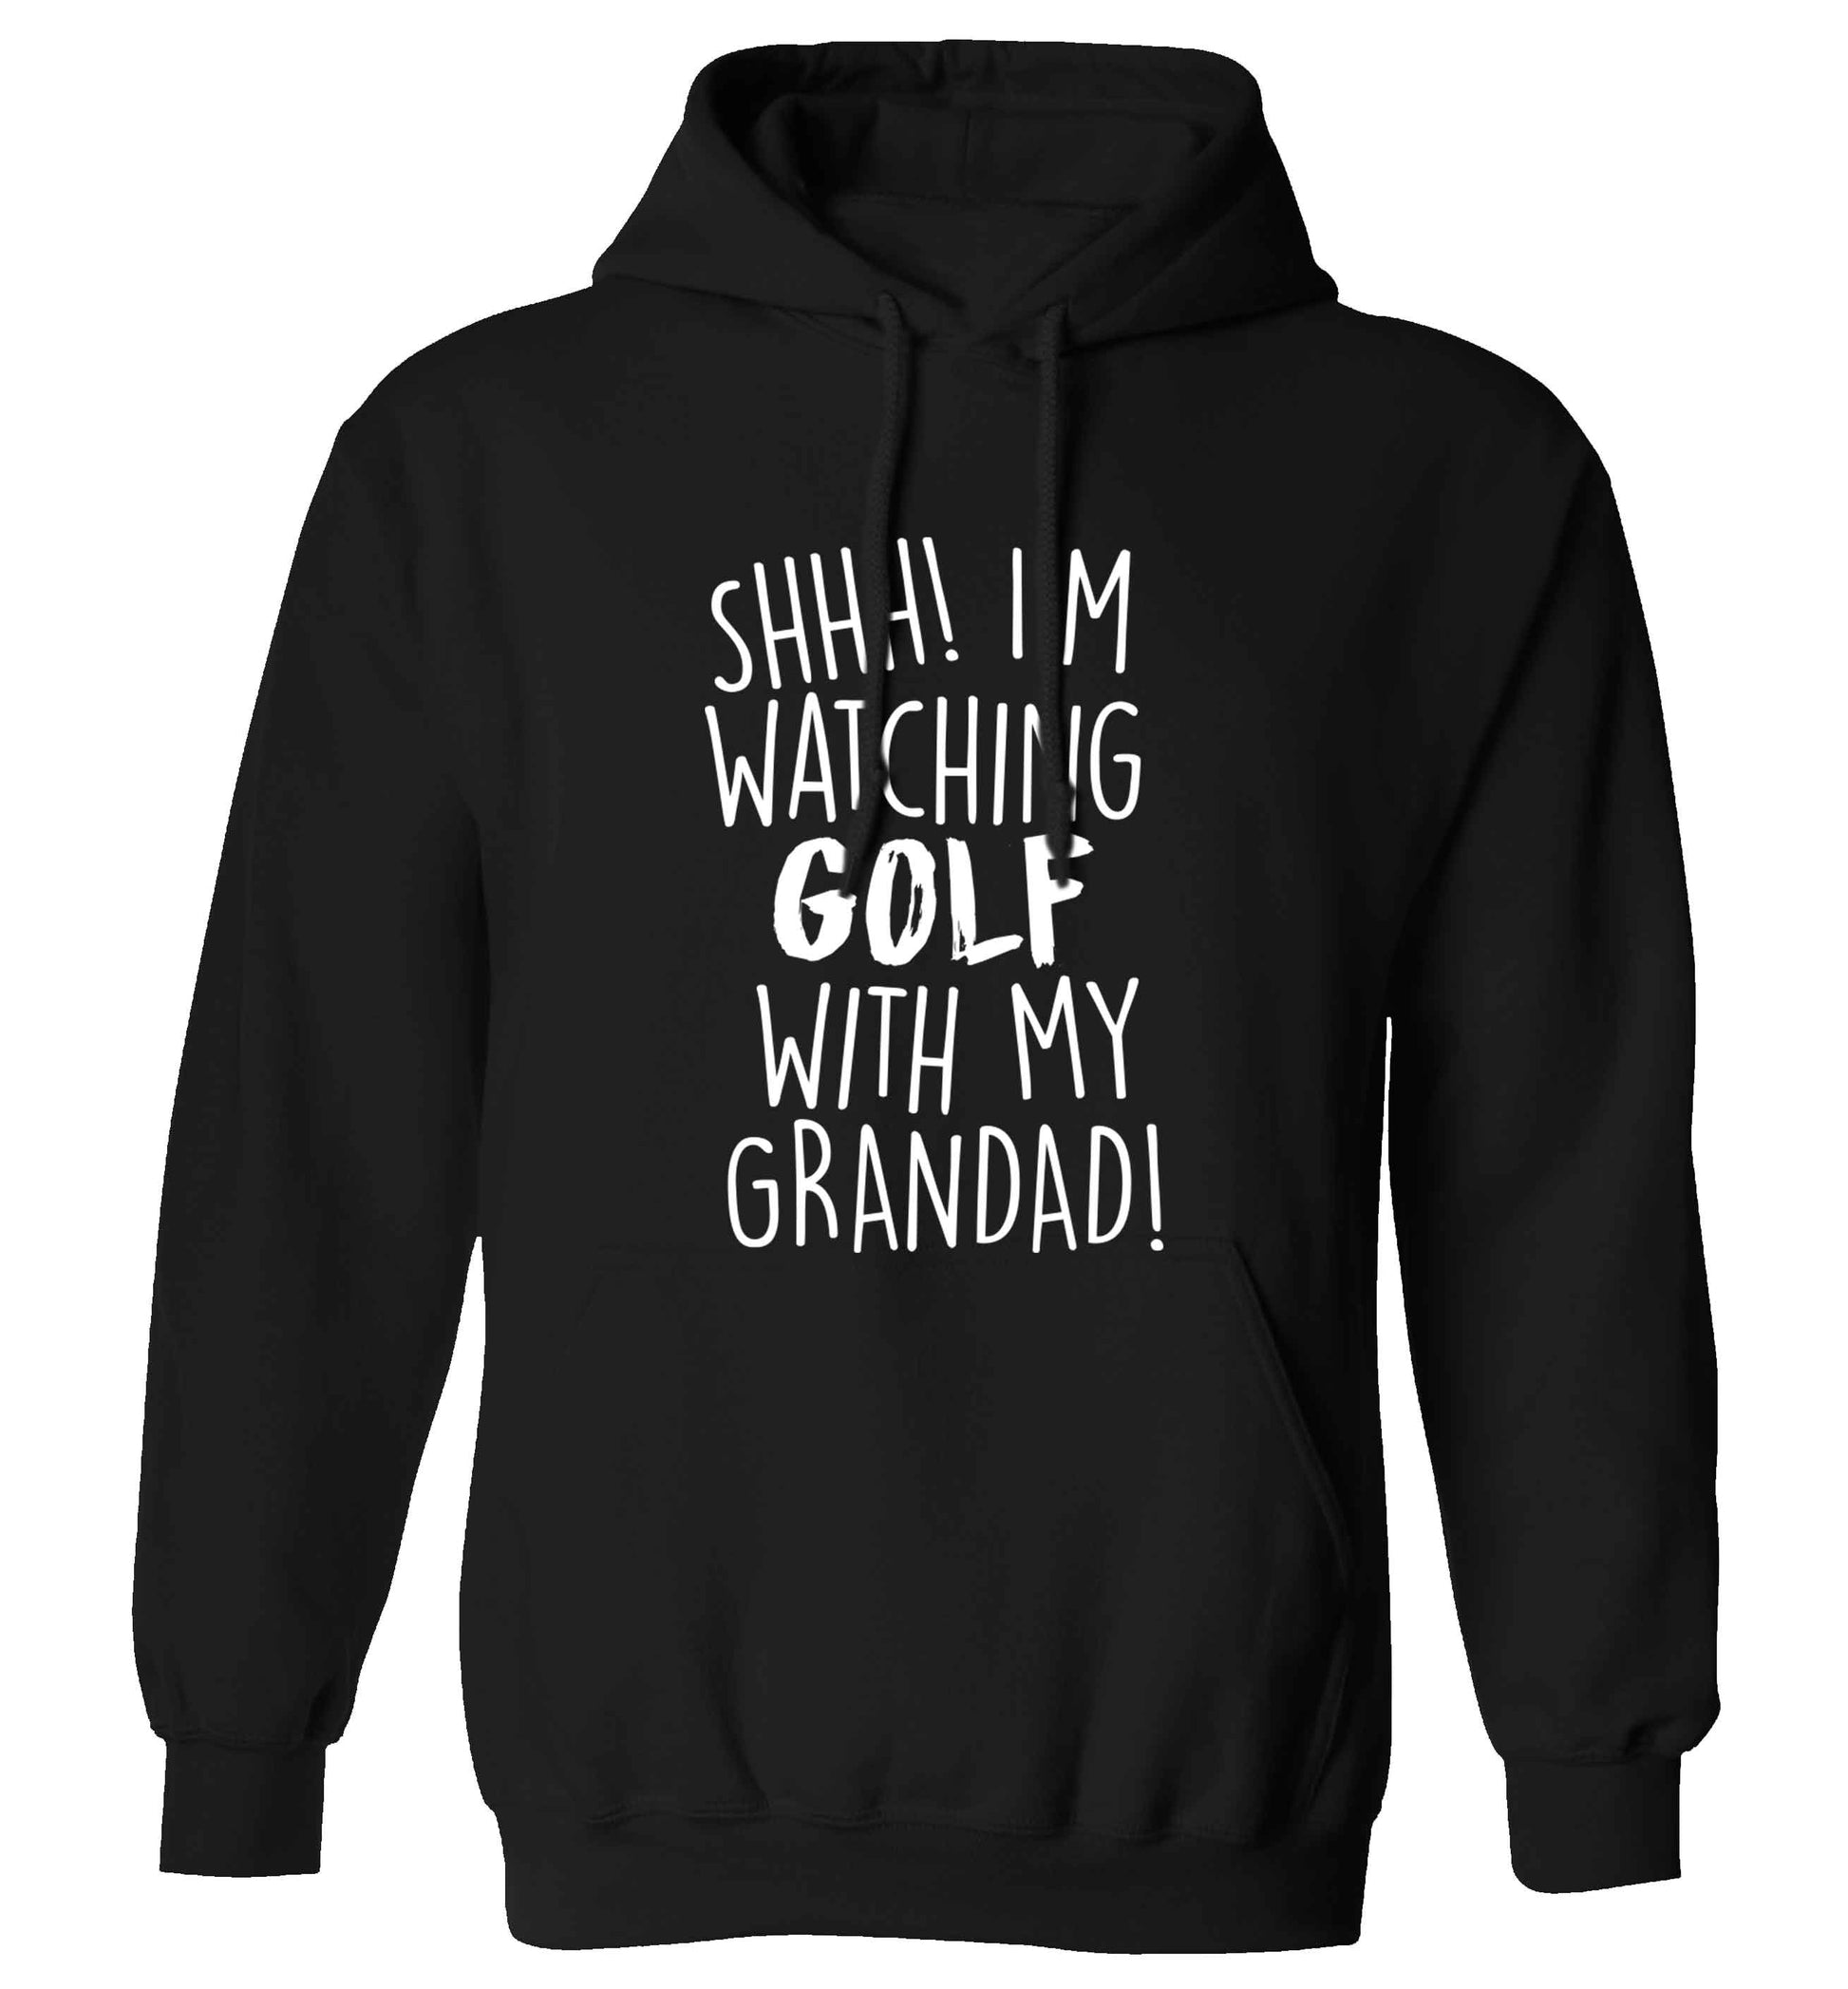 Shh I'm watching golf with my grandad adults unisex black hoodie 2XL